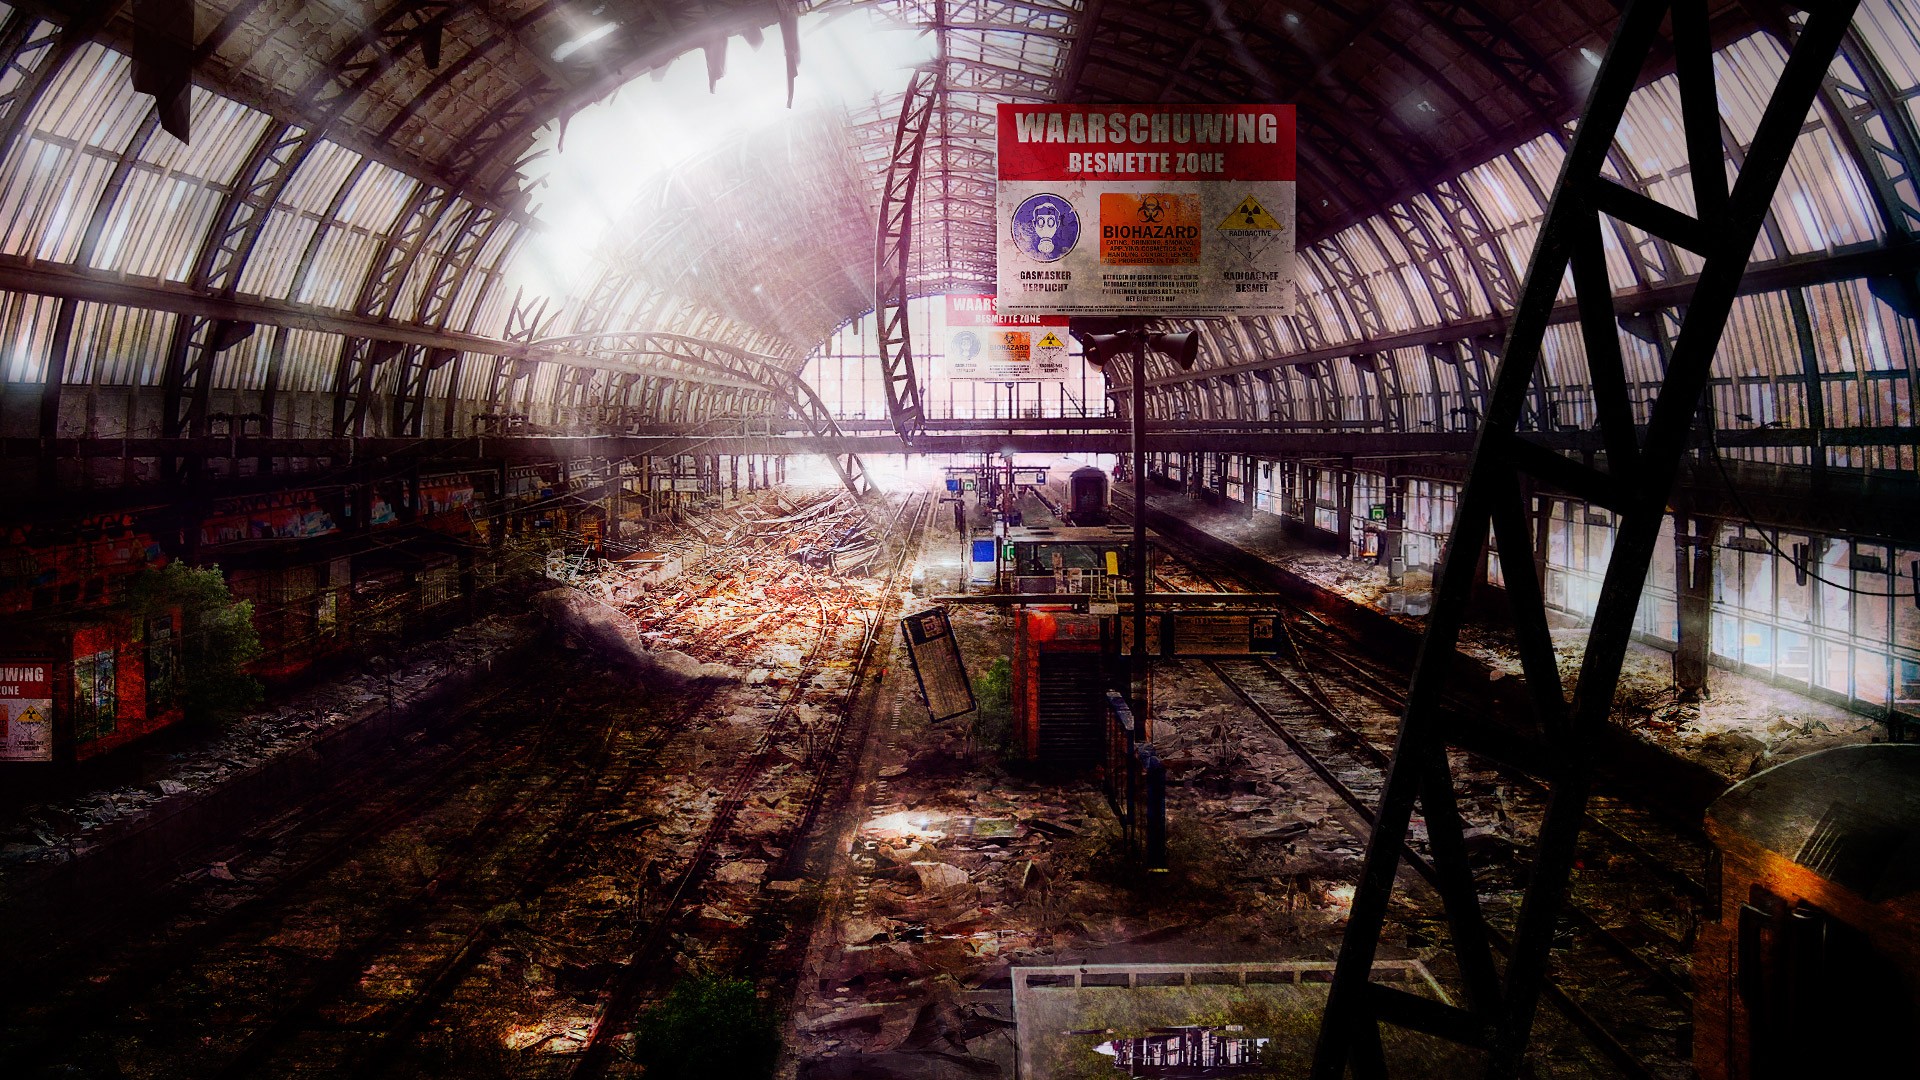 General 1920x1080 apocalyptic digital art train station old building abandoned artwork railway Netherlands ruins